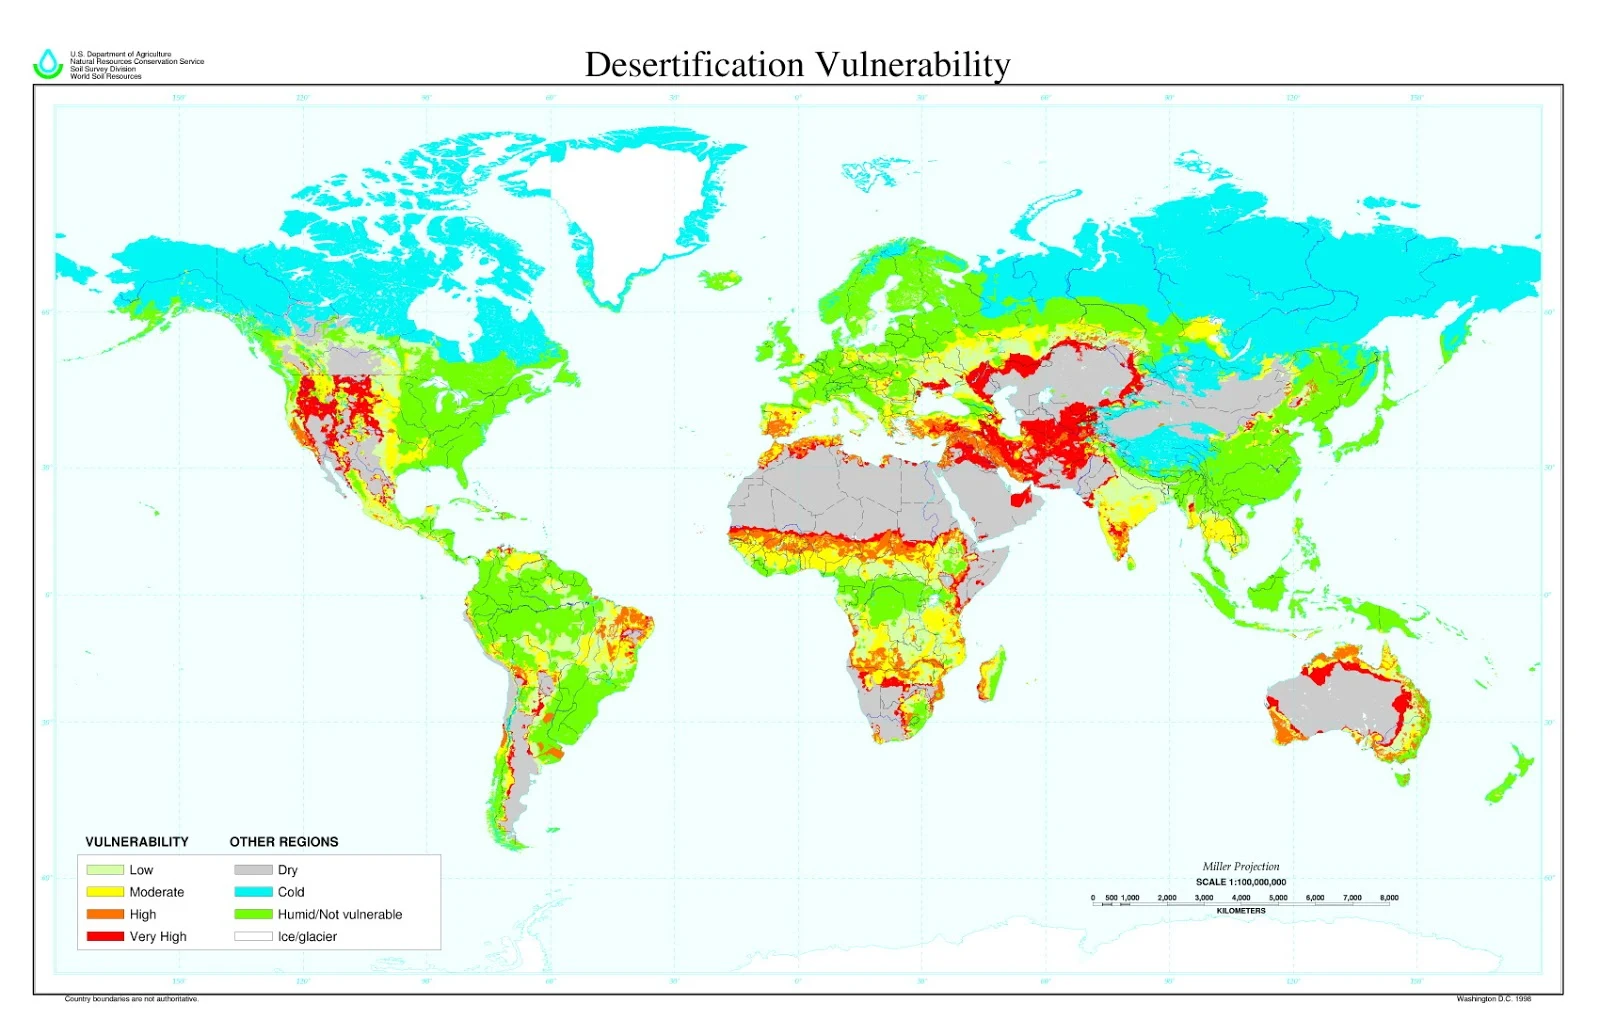 Desertification vulnerability